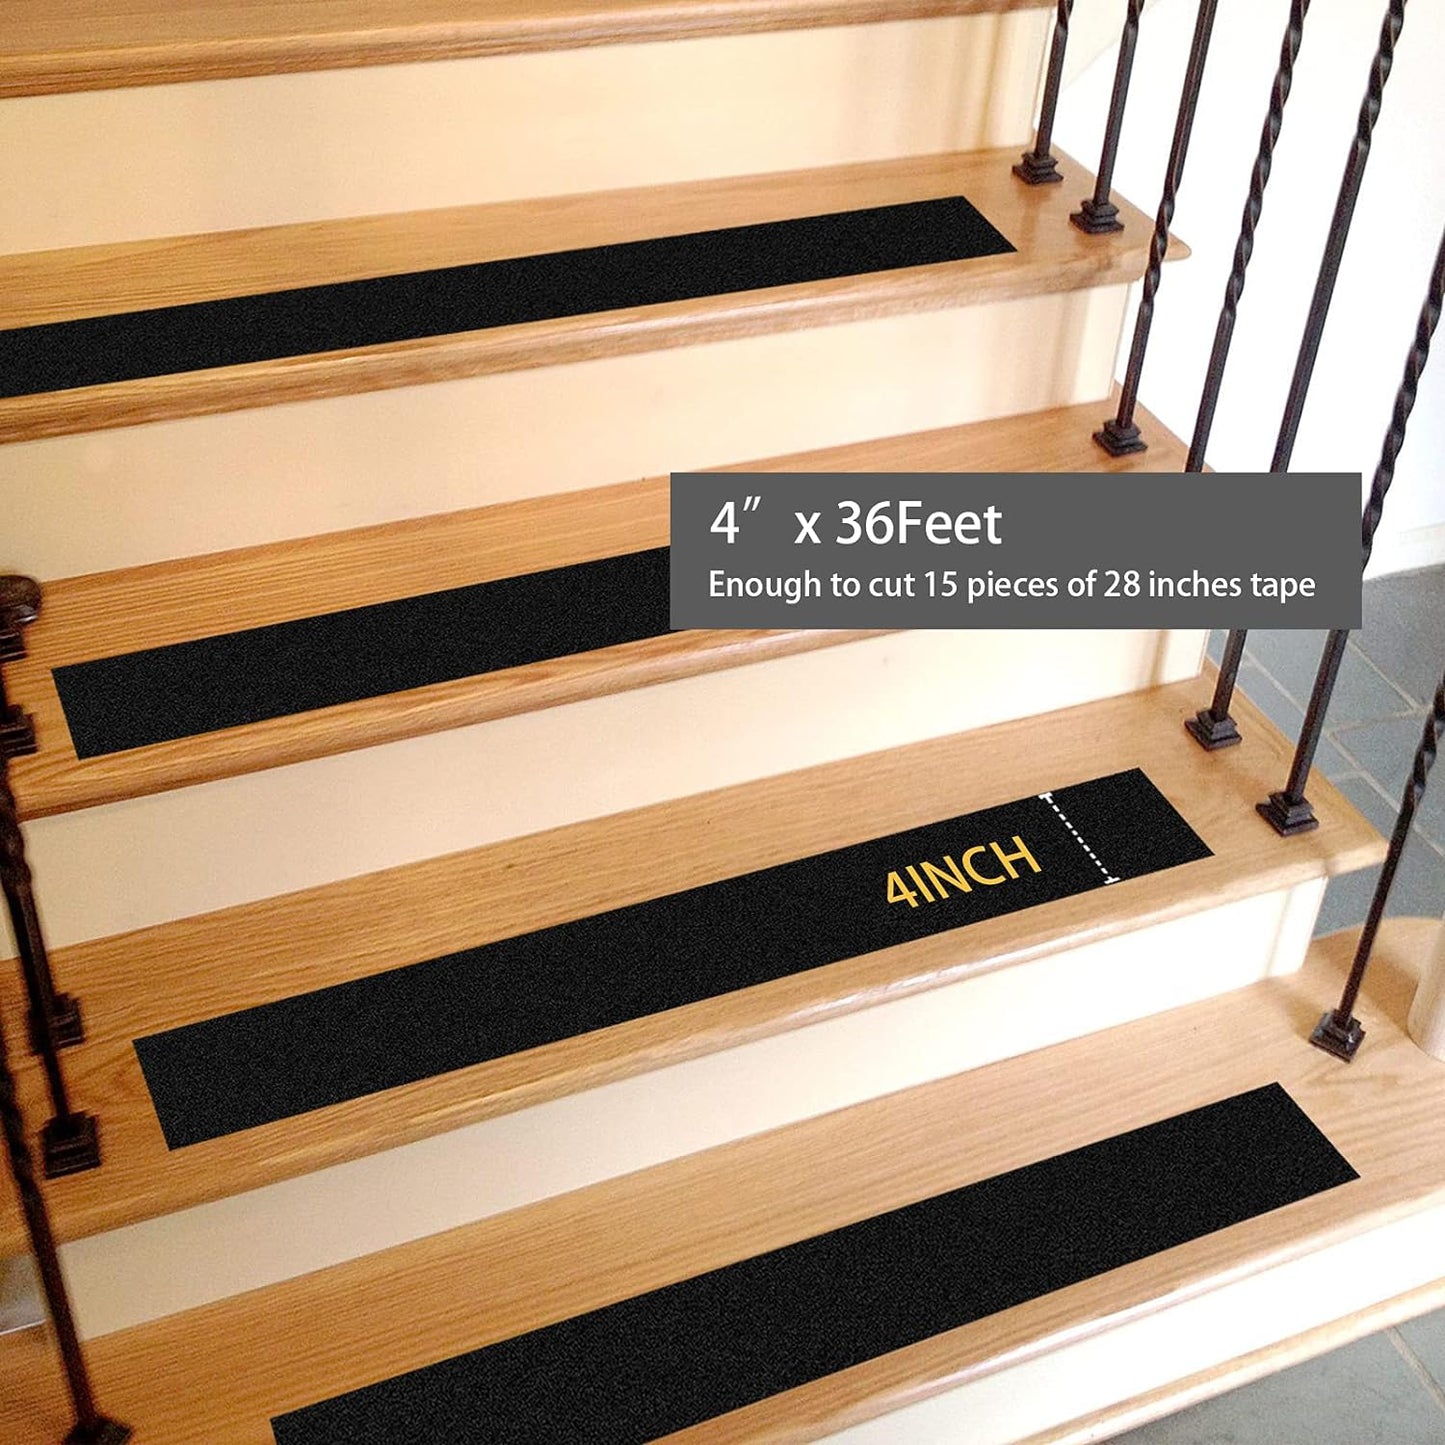 Anti-Slip Tape for Stairs